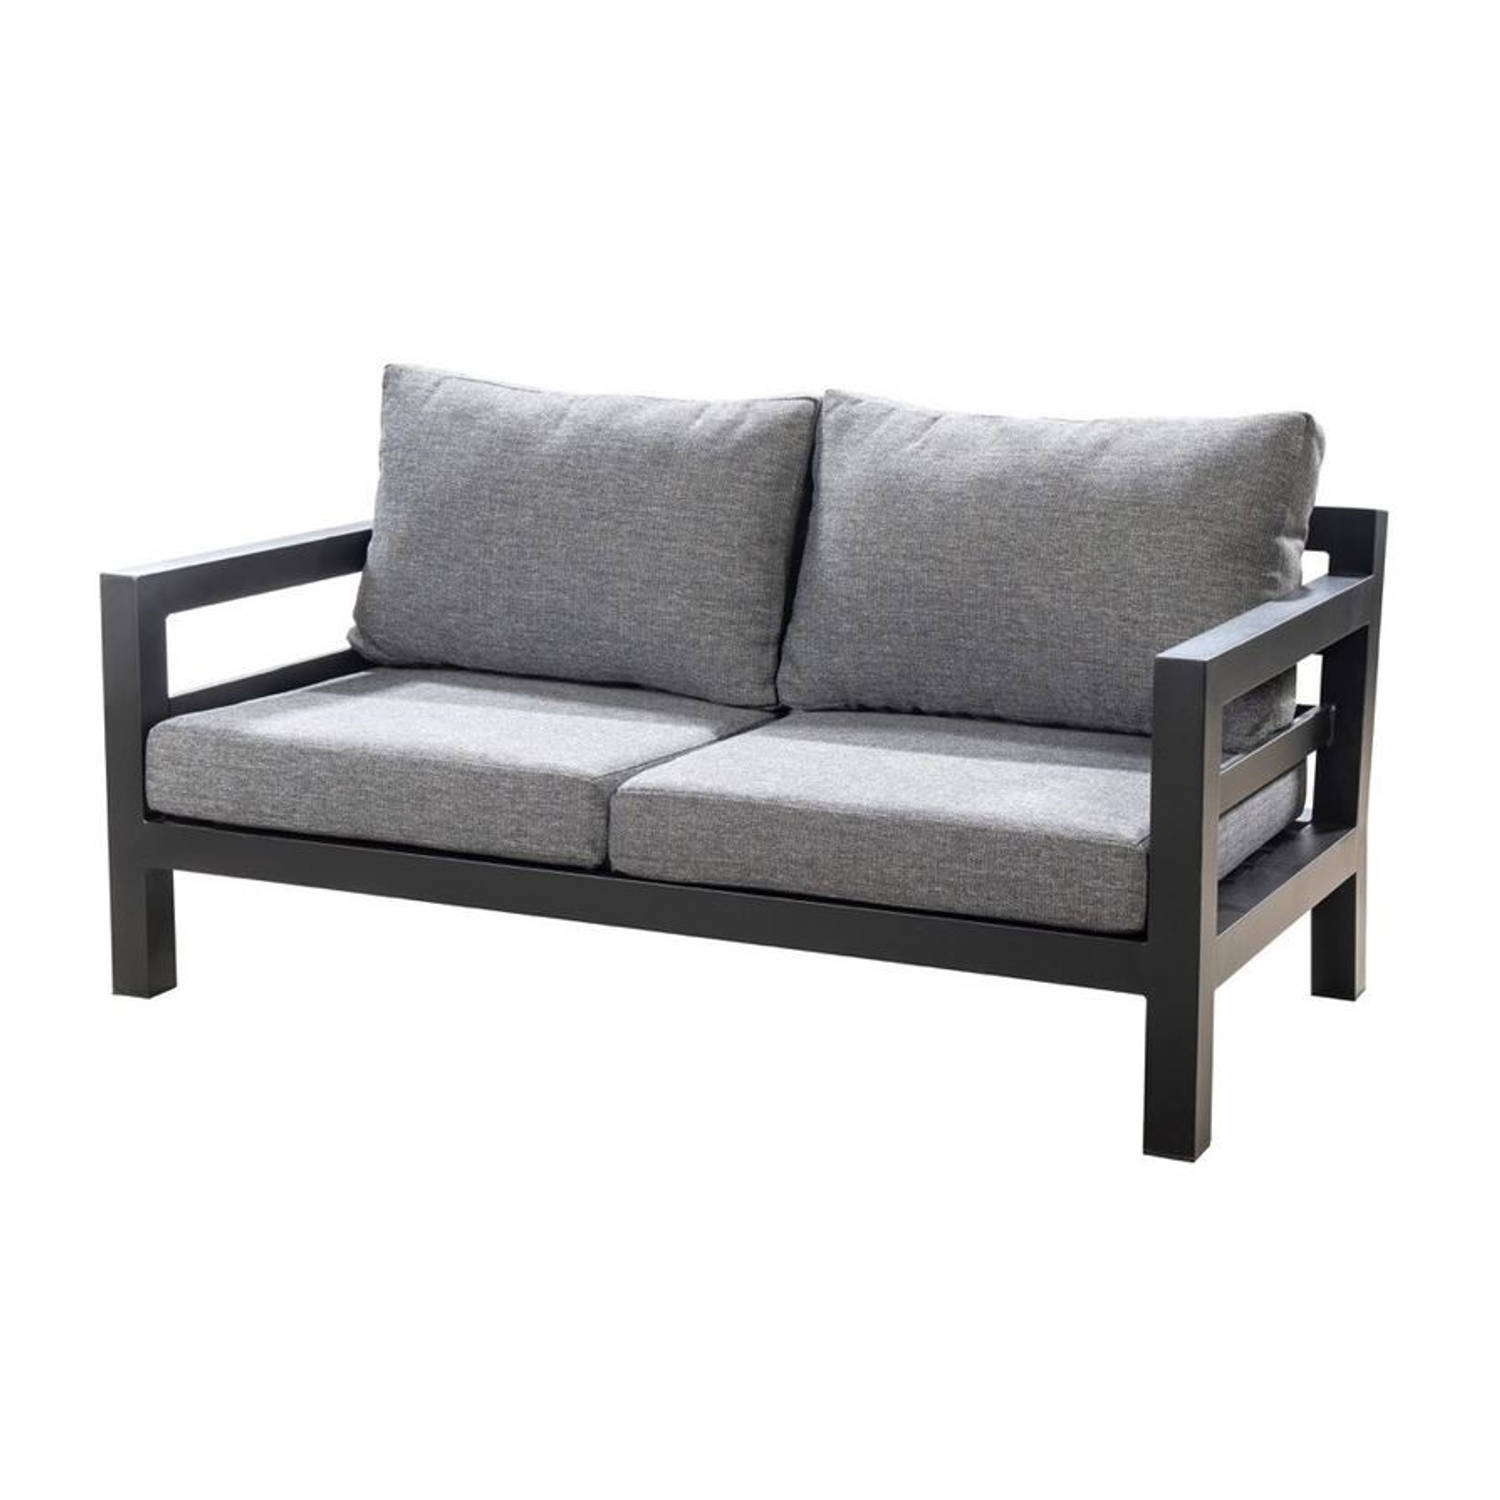 Humoristisch transactie Meetbaar Midori sofa 2 seater alu dark grey/mixed grey | Blokker